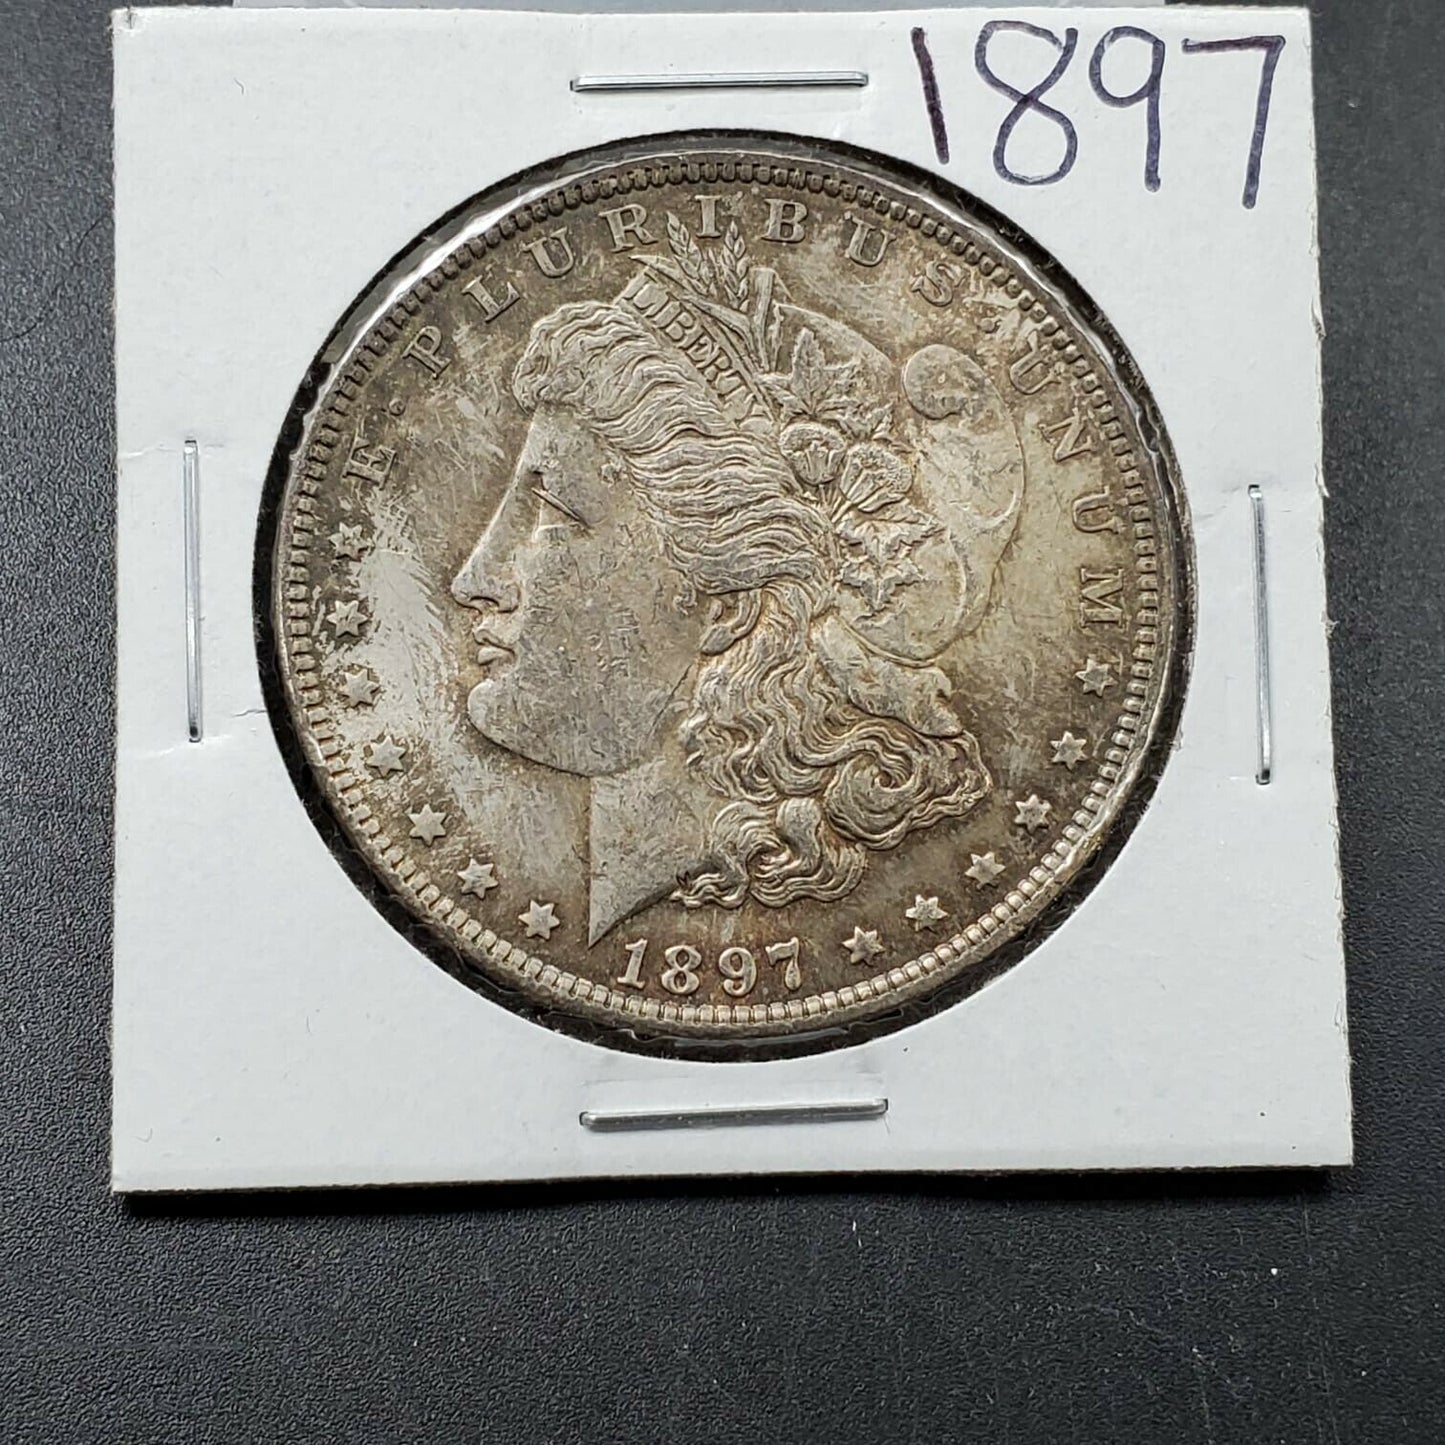 1897 p Morgan Silver Eagle Dollar $1 Coin Average UNC Uncirculated Neat Toning